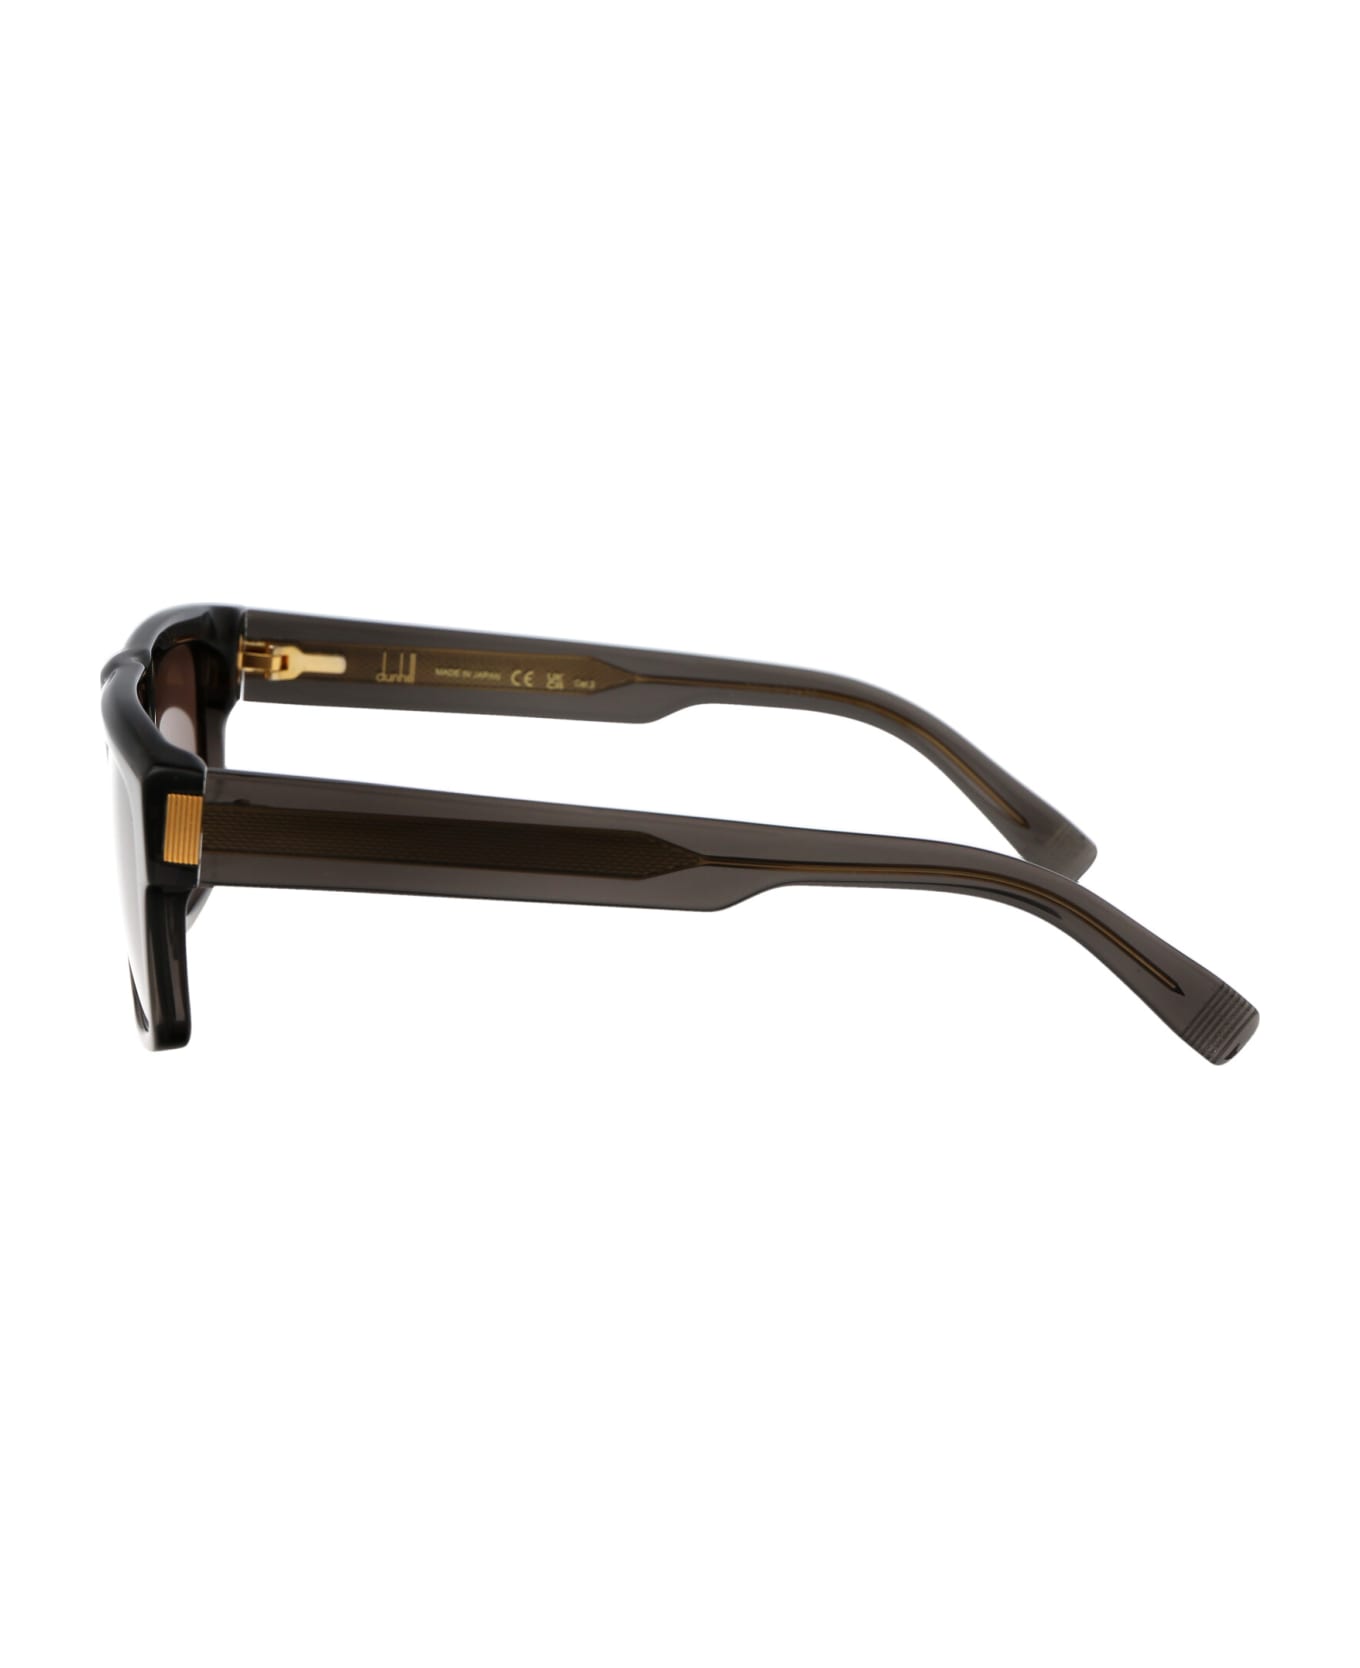 Dunhill Du0055s Sunglasses - 004 GREY GREY BROWN サングラス